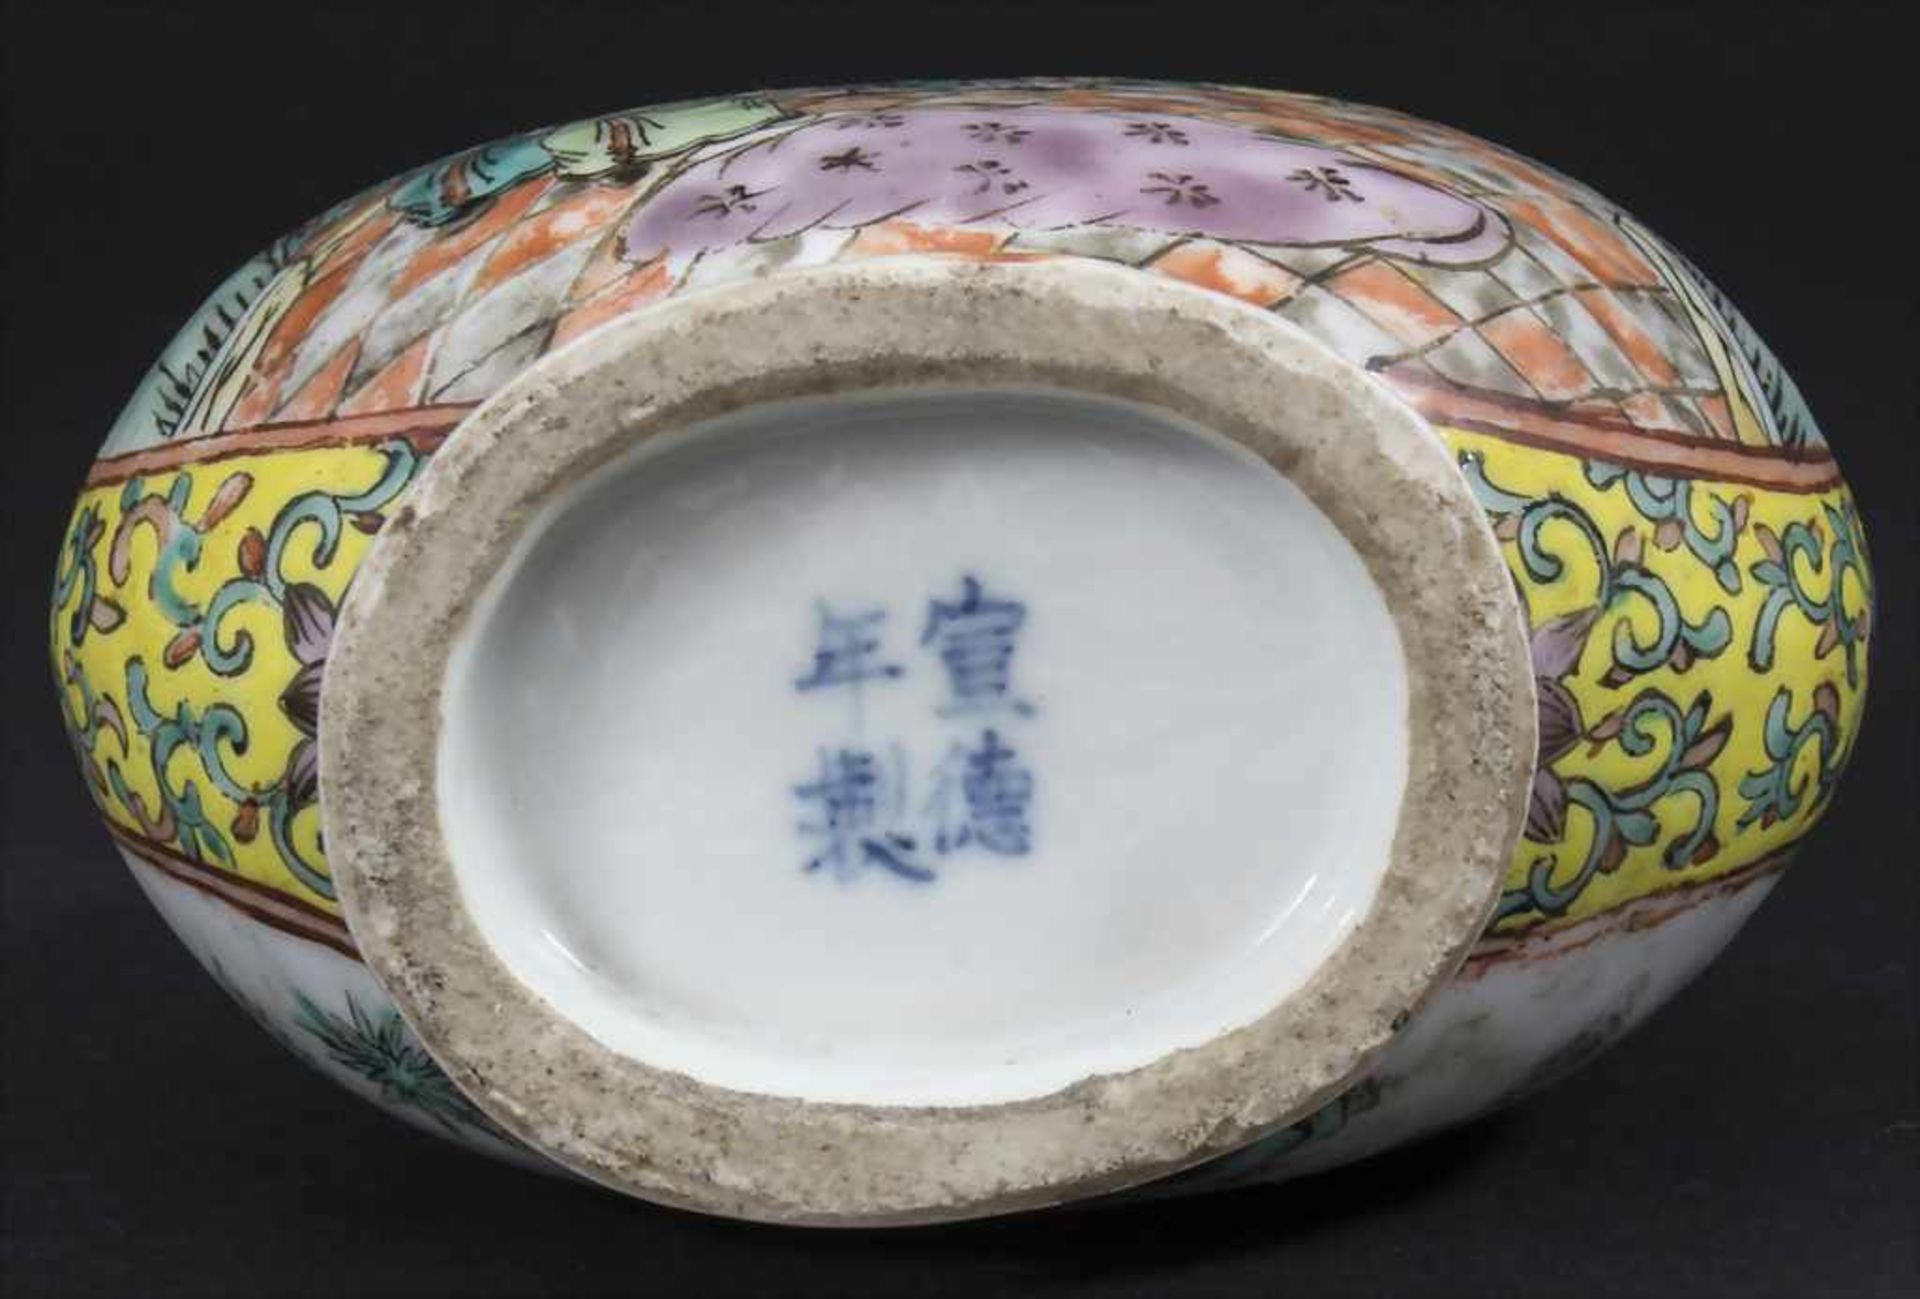 Porzellan-Ziervase / A porcelain decorative vase, China, Qing-Dynastie (1644-1911) - Image 5 of 9